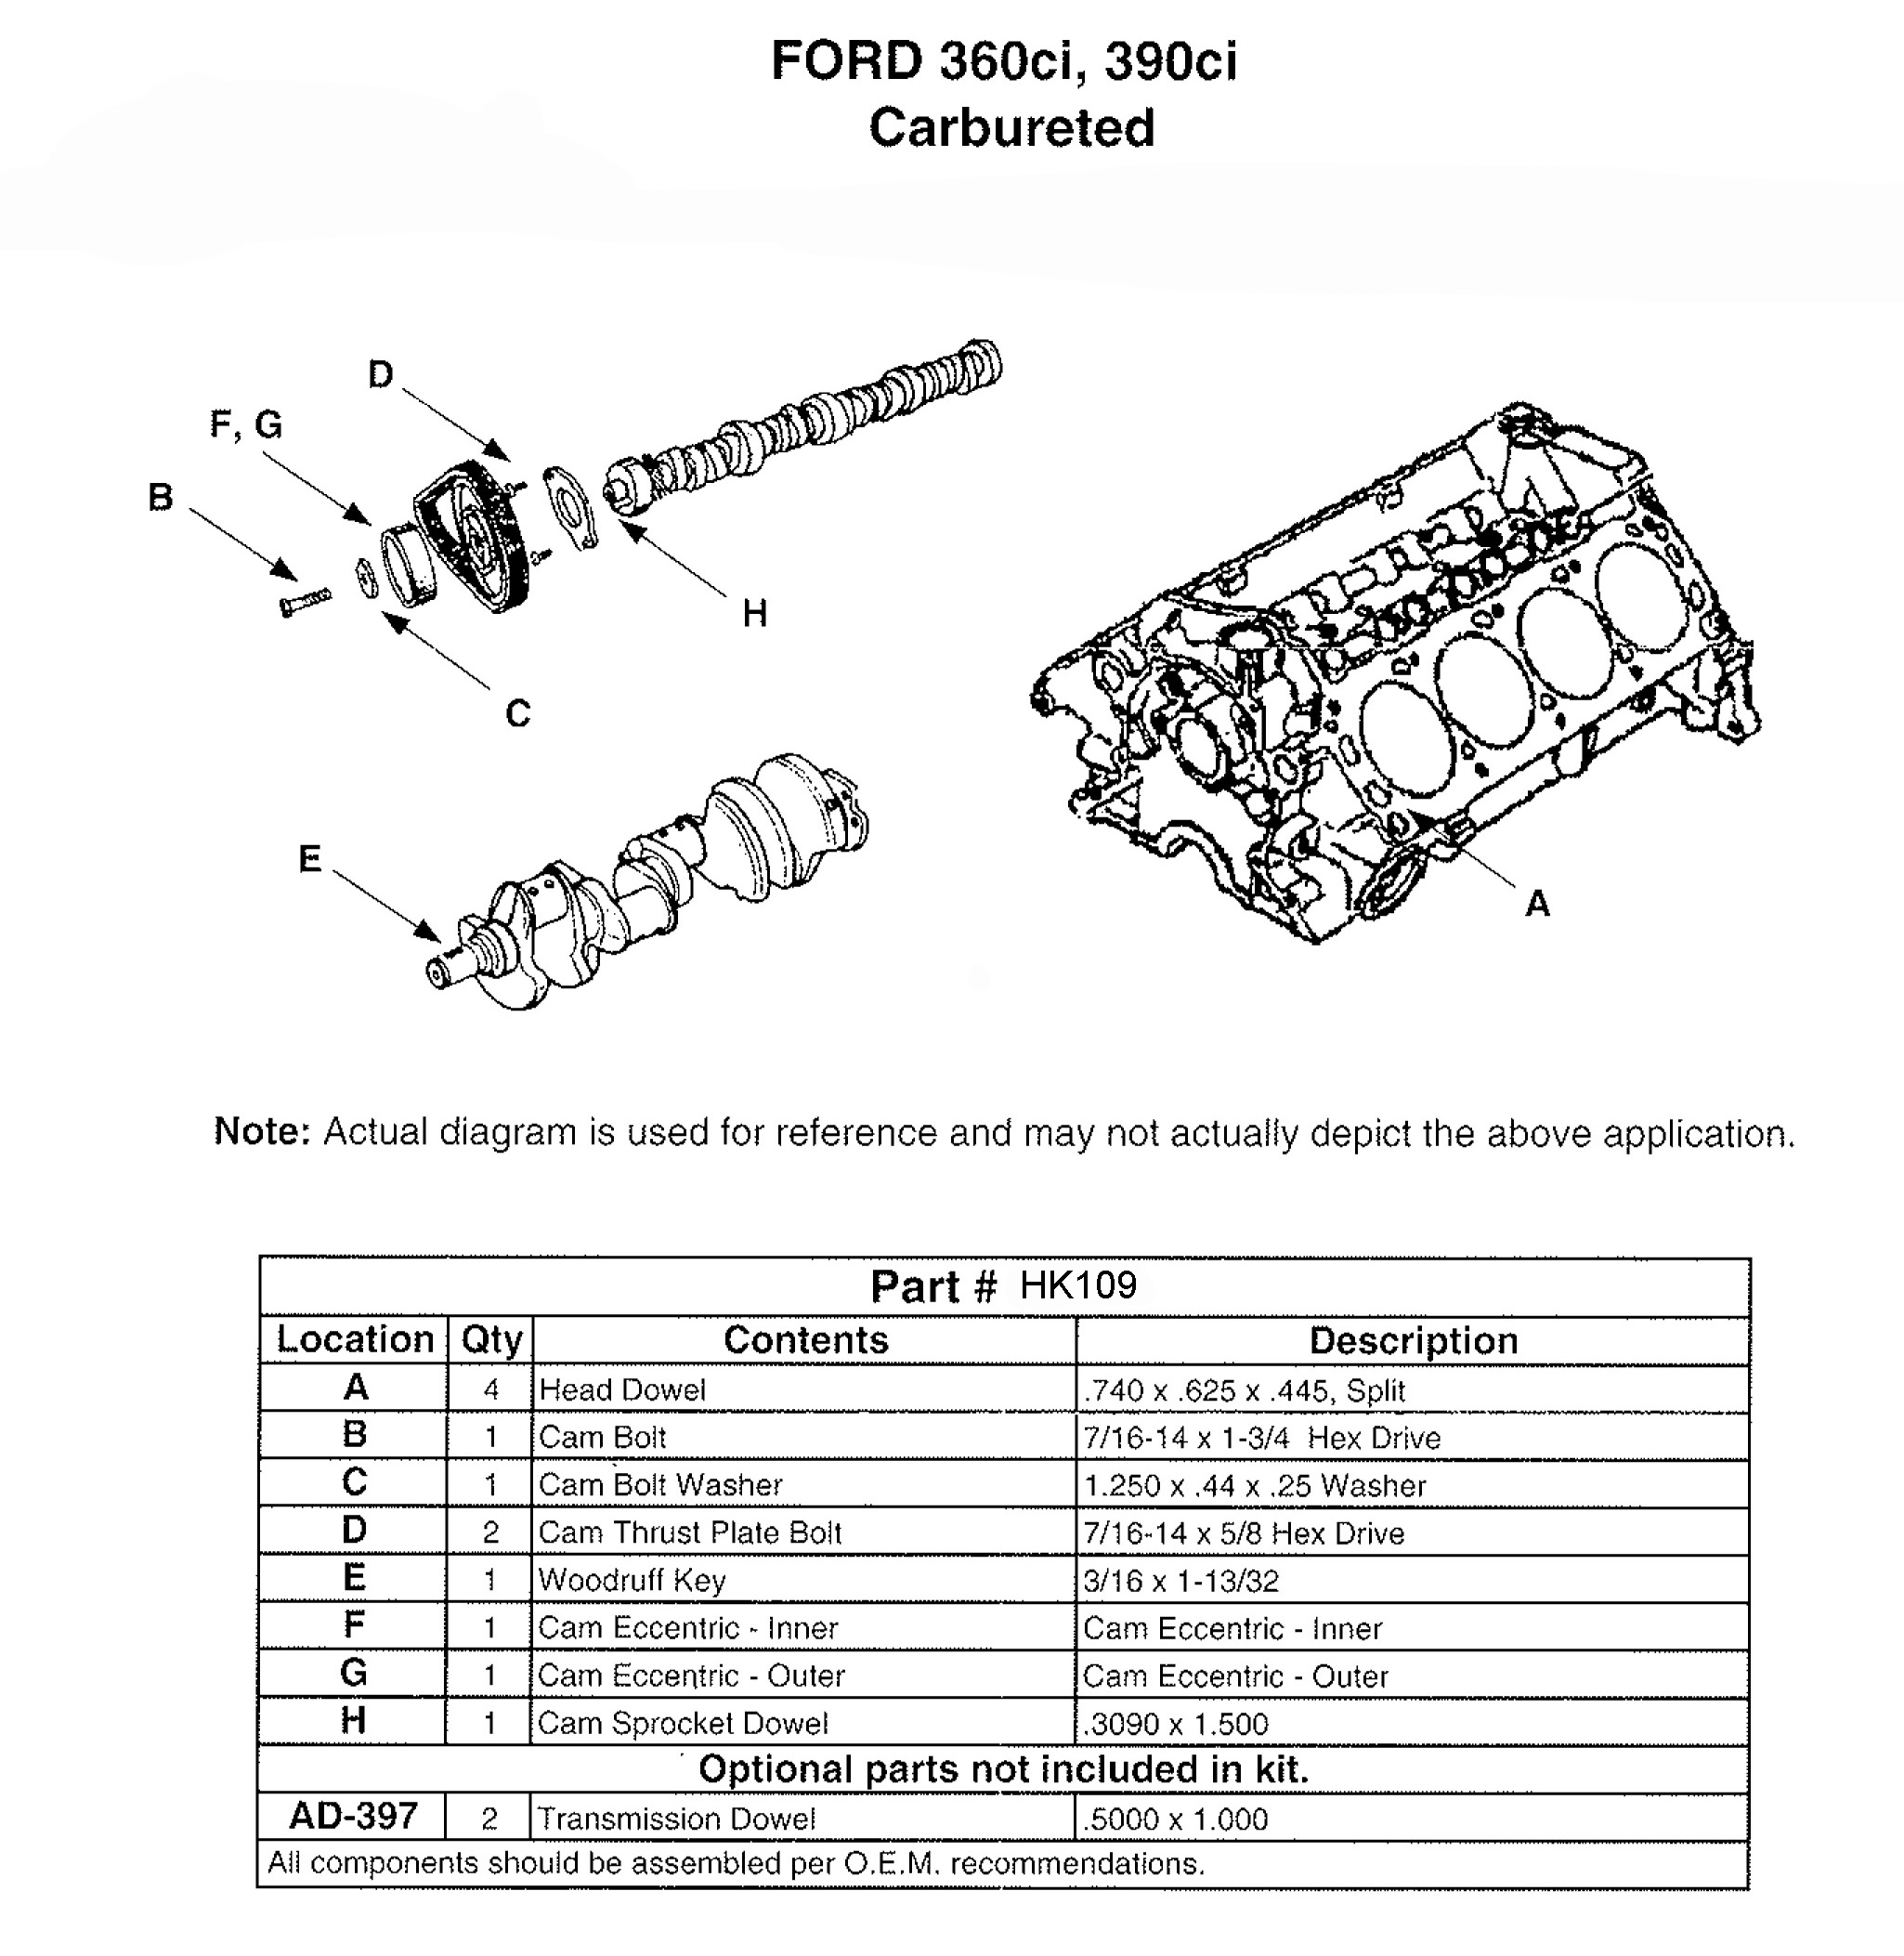 Engine Camshaft Hardware Kit